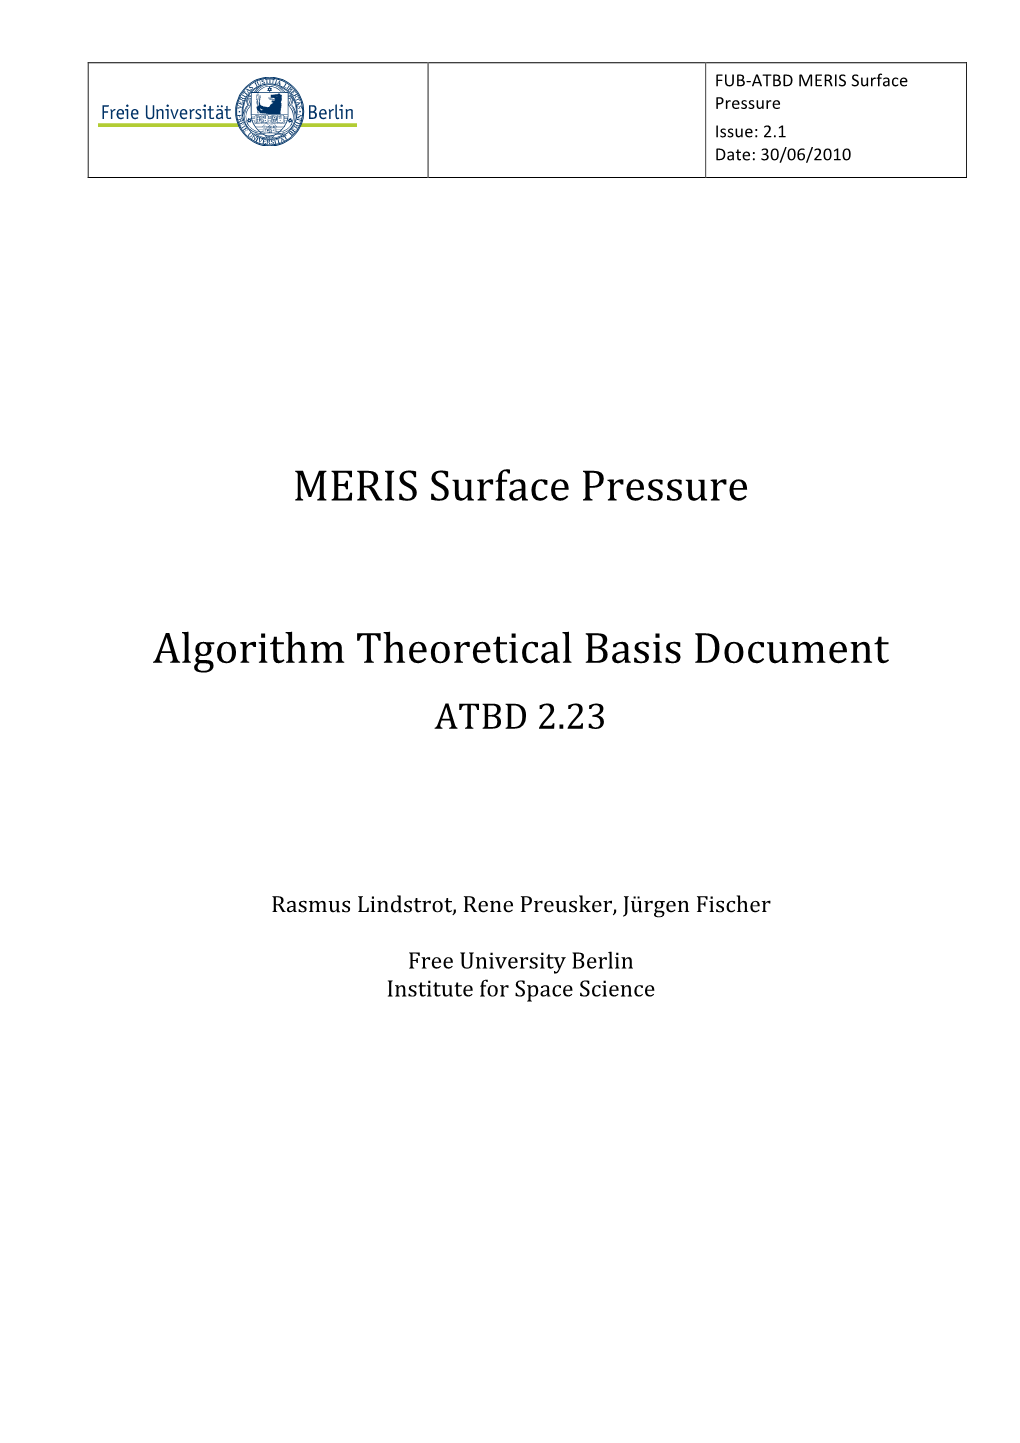 MERIS Surface Pressure Algorithm Theoretical Basis Document